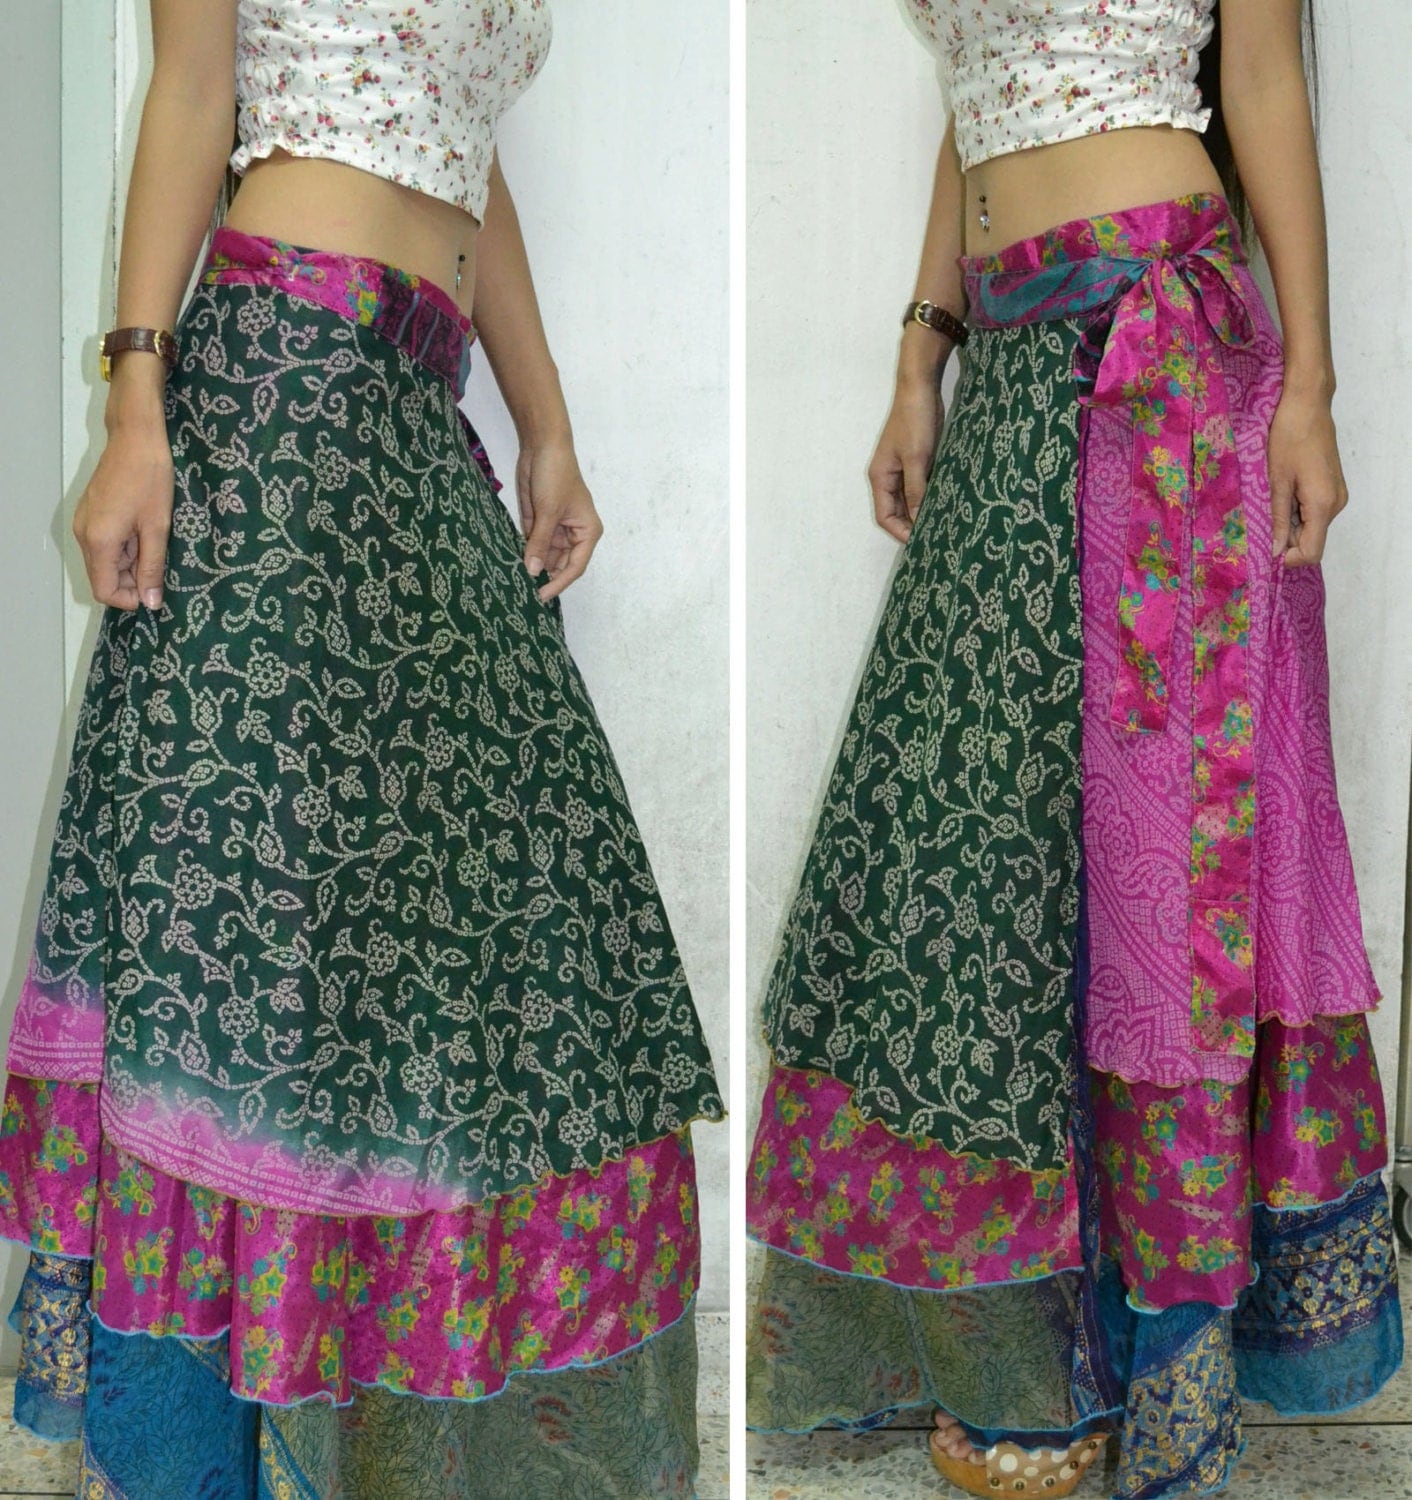 3 Layers Long Wrap Skirt India Sari Hippie Gypsy Boho Dance or